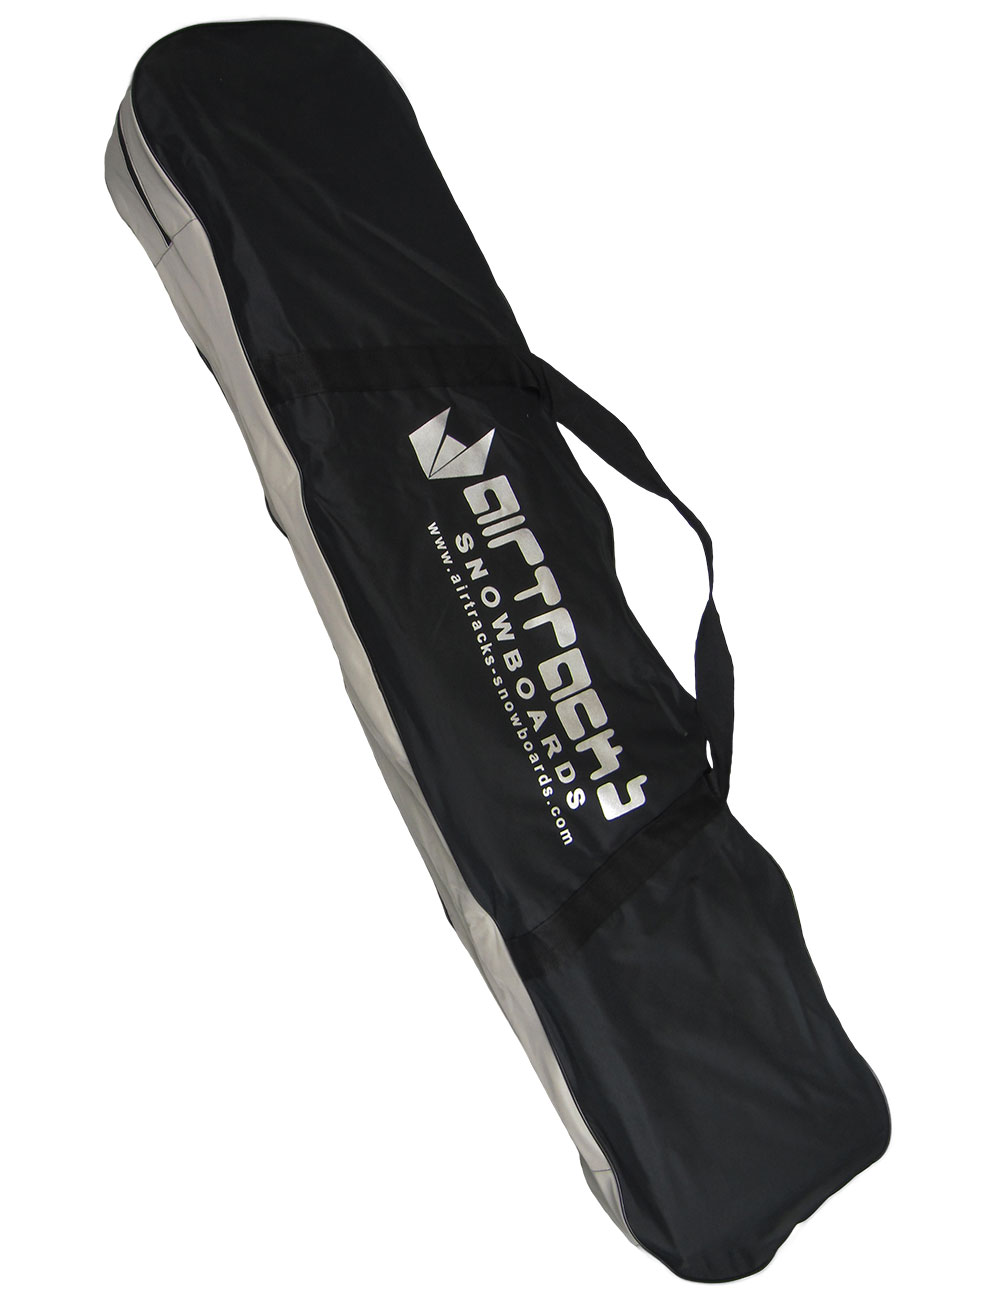 Snowboardbag Rawstyle Snowboard Tasche extra groß 170cm Tasche Boardbag XXL 